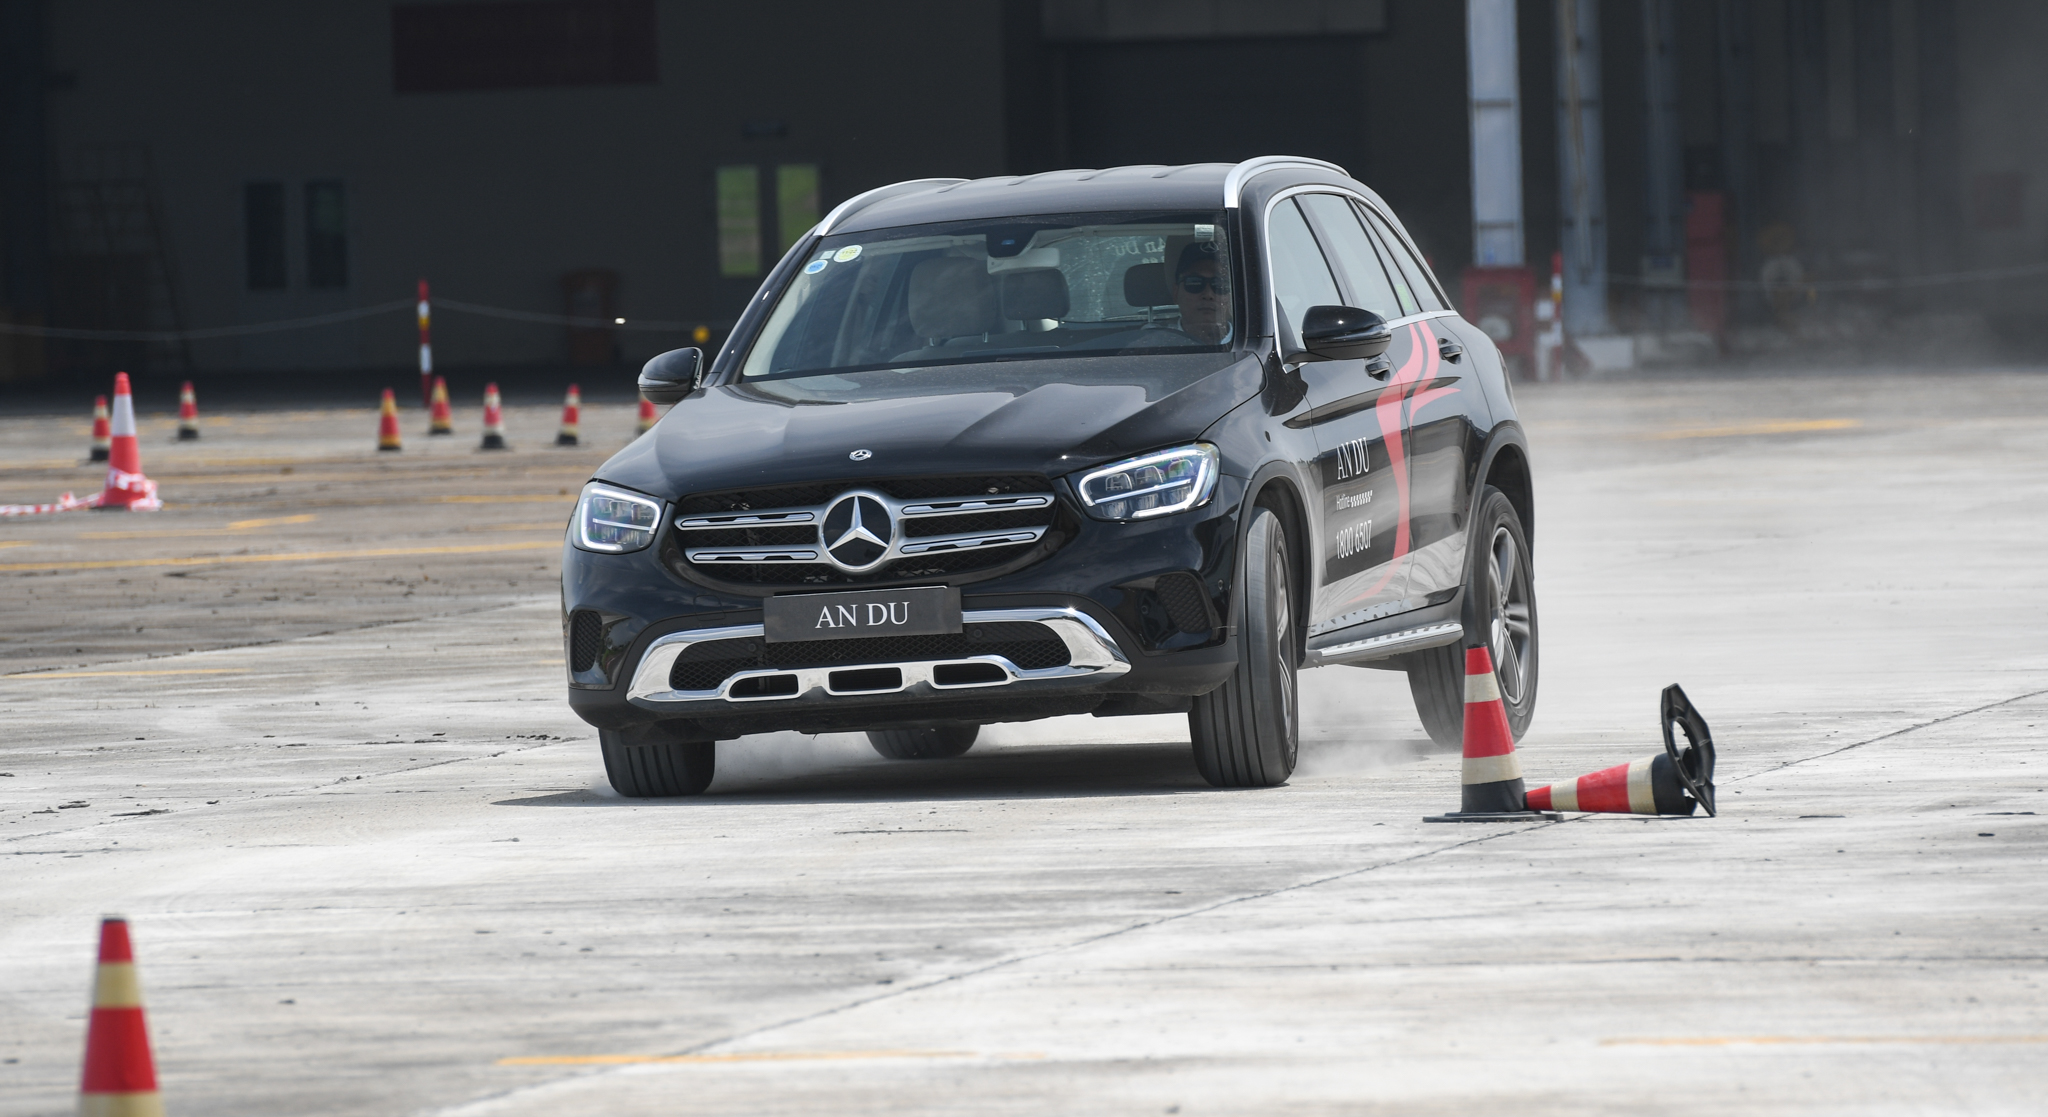 Practice advanced driving skills on a Mercedes car mercedes-an-du-01.jpg